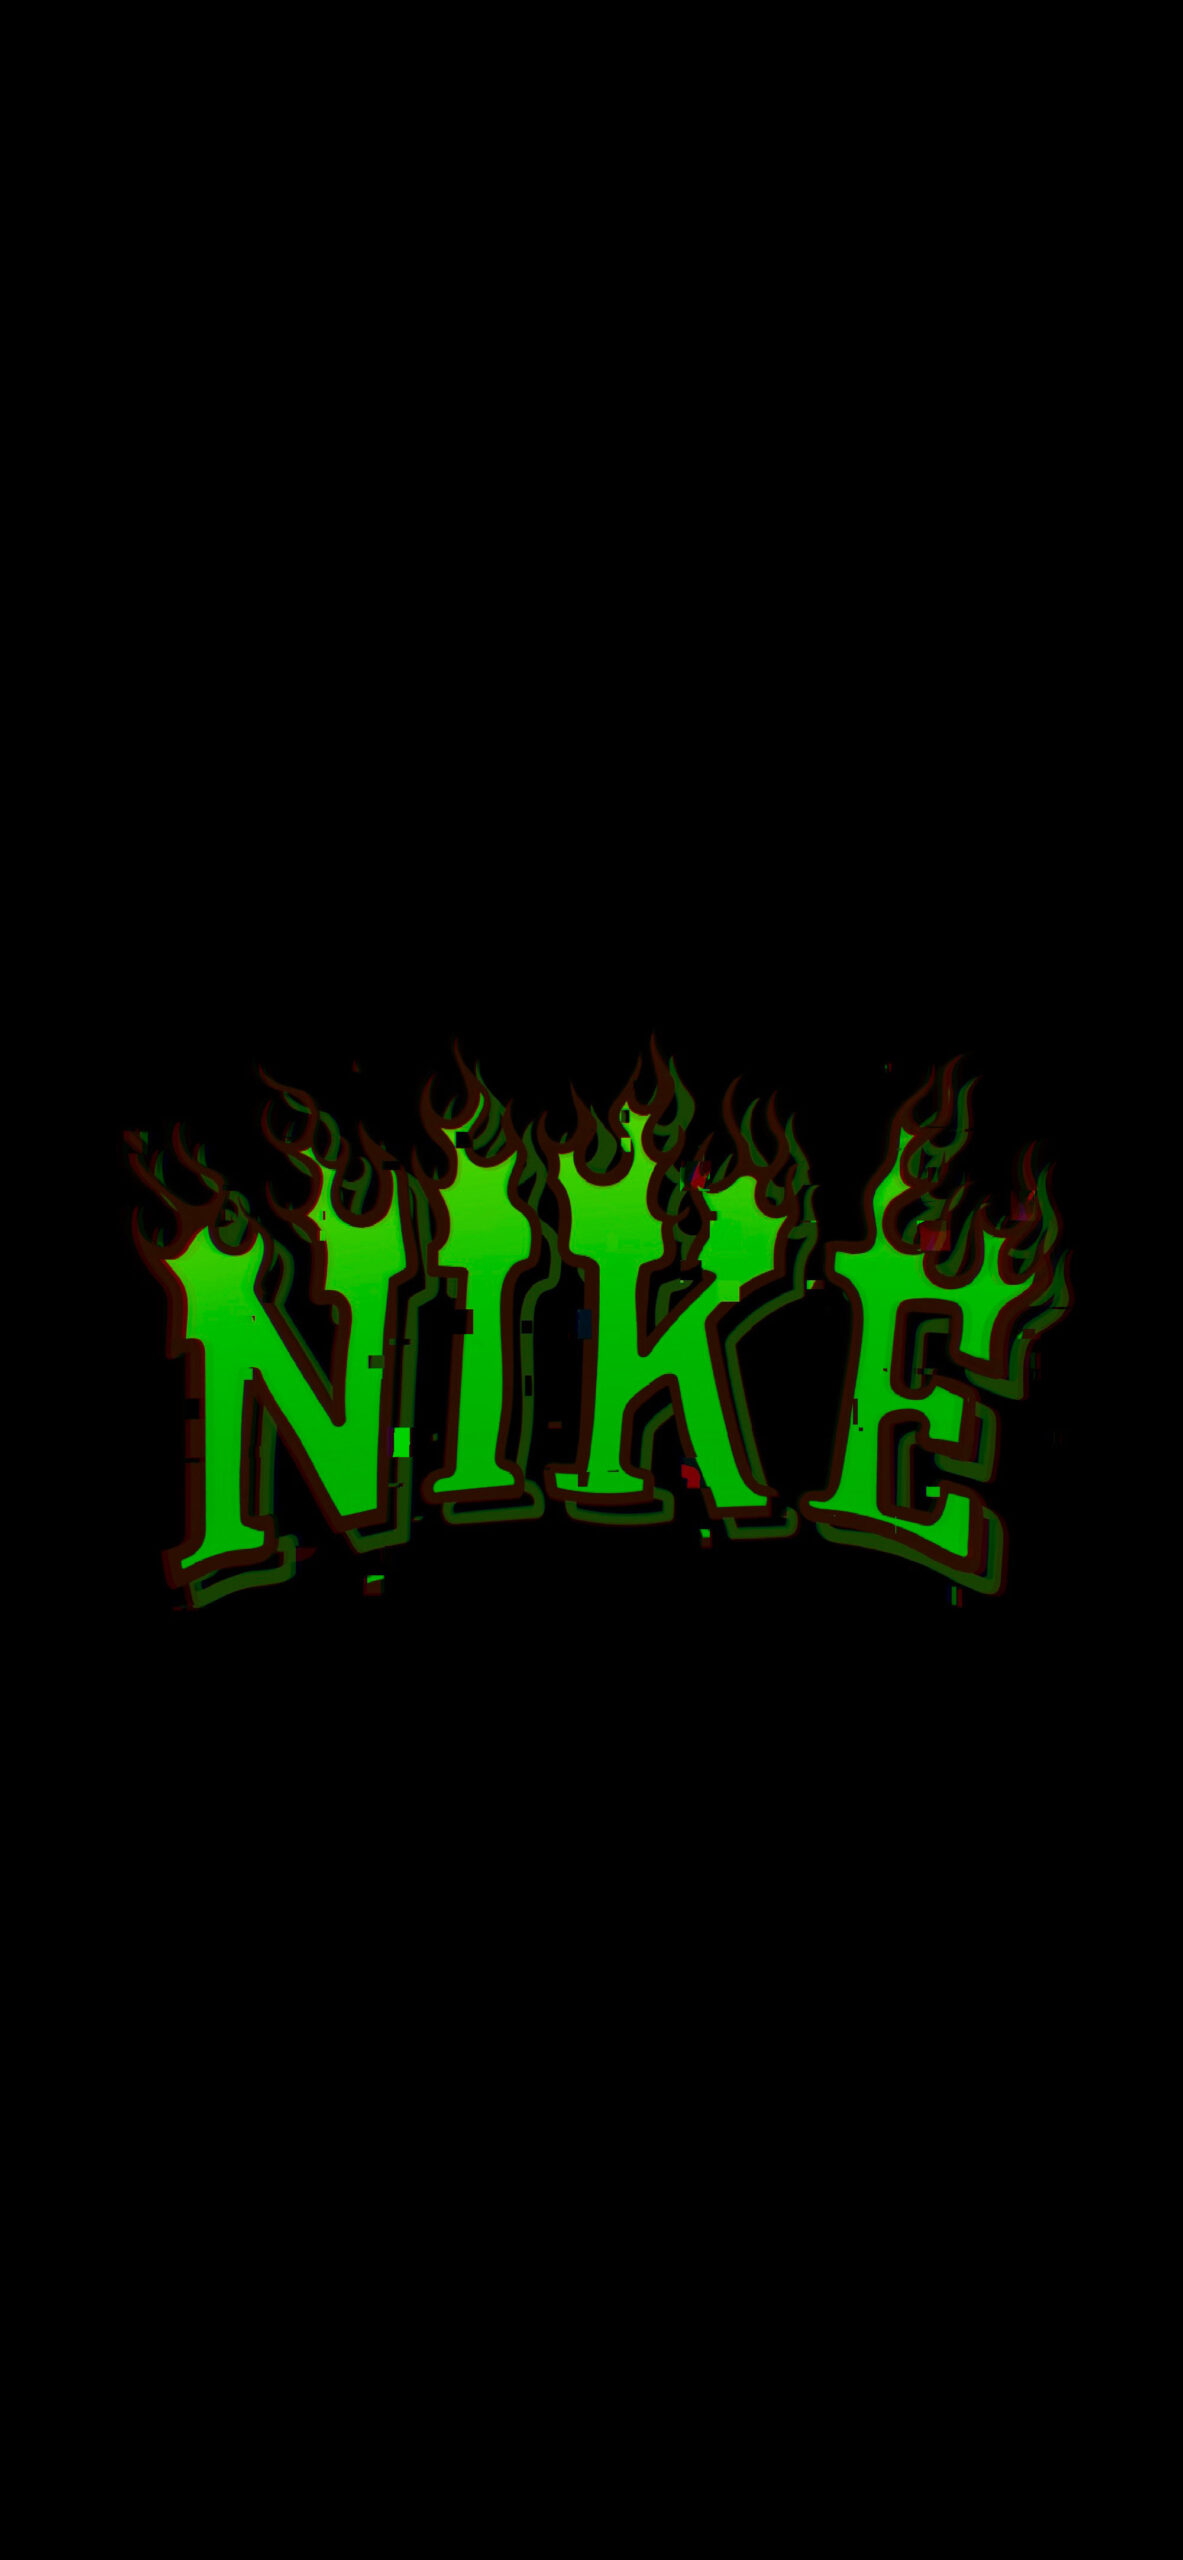 Black Nike Wallpaper with Flame Logo - iPhone Nike Wallpapers HD